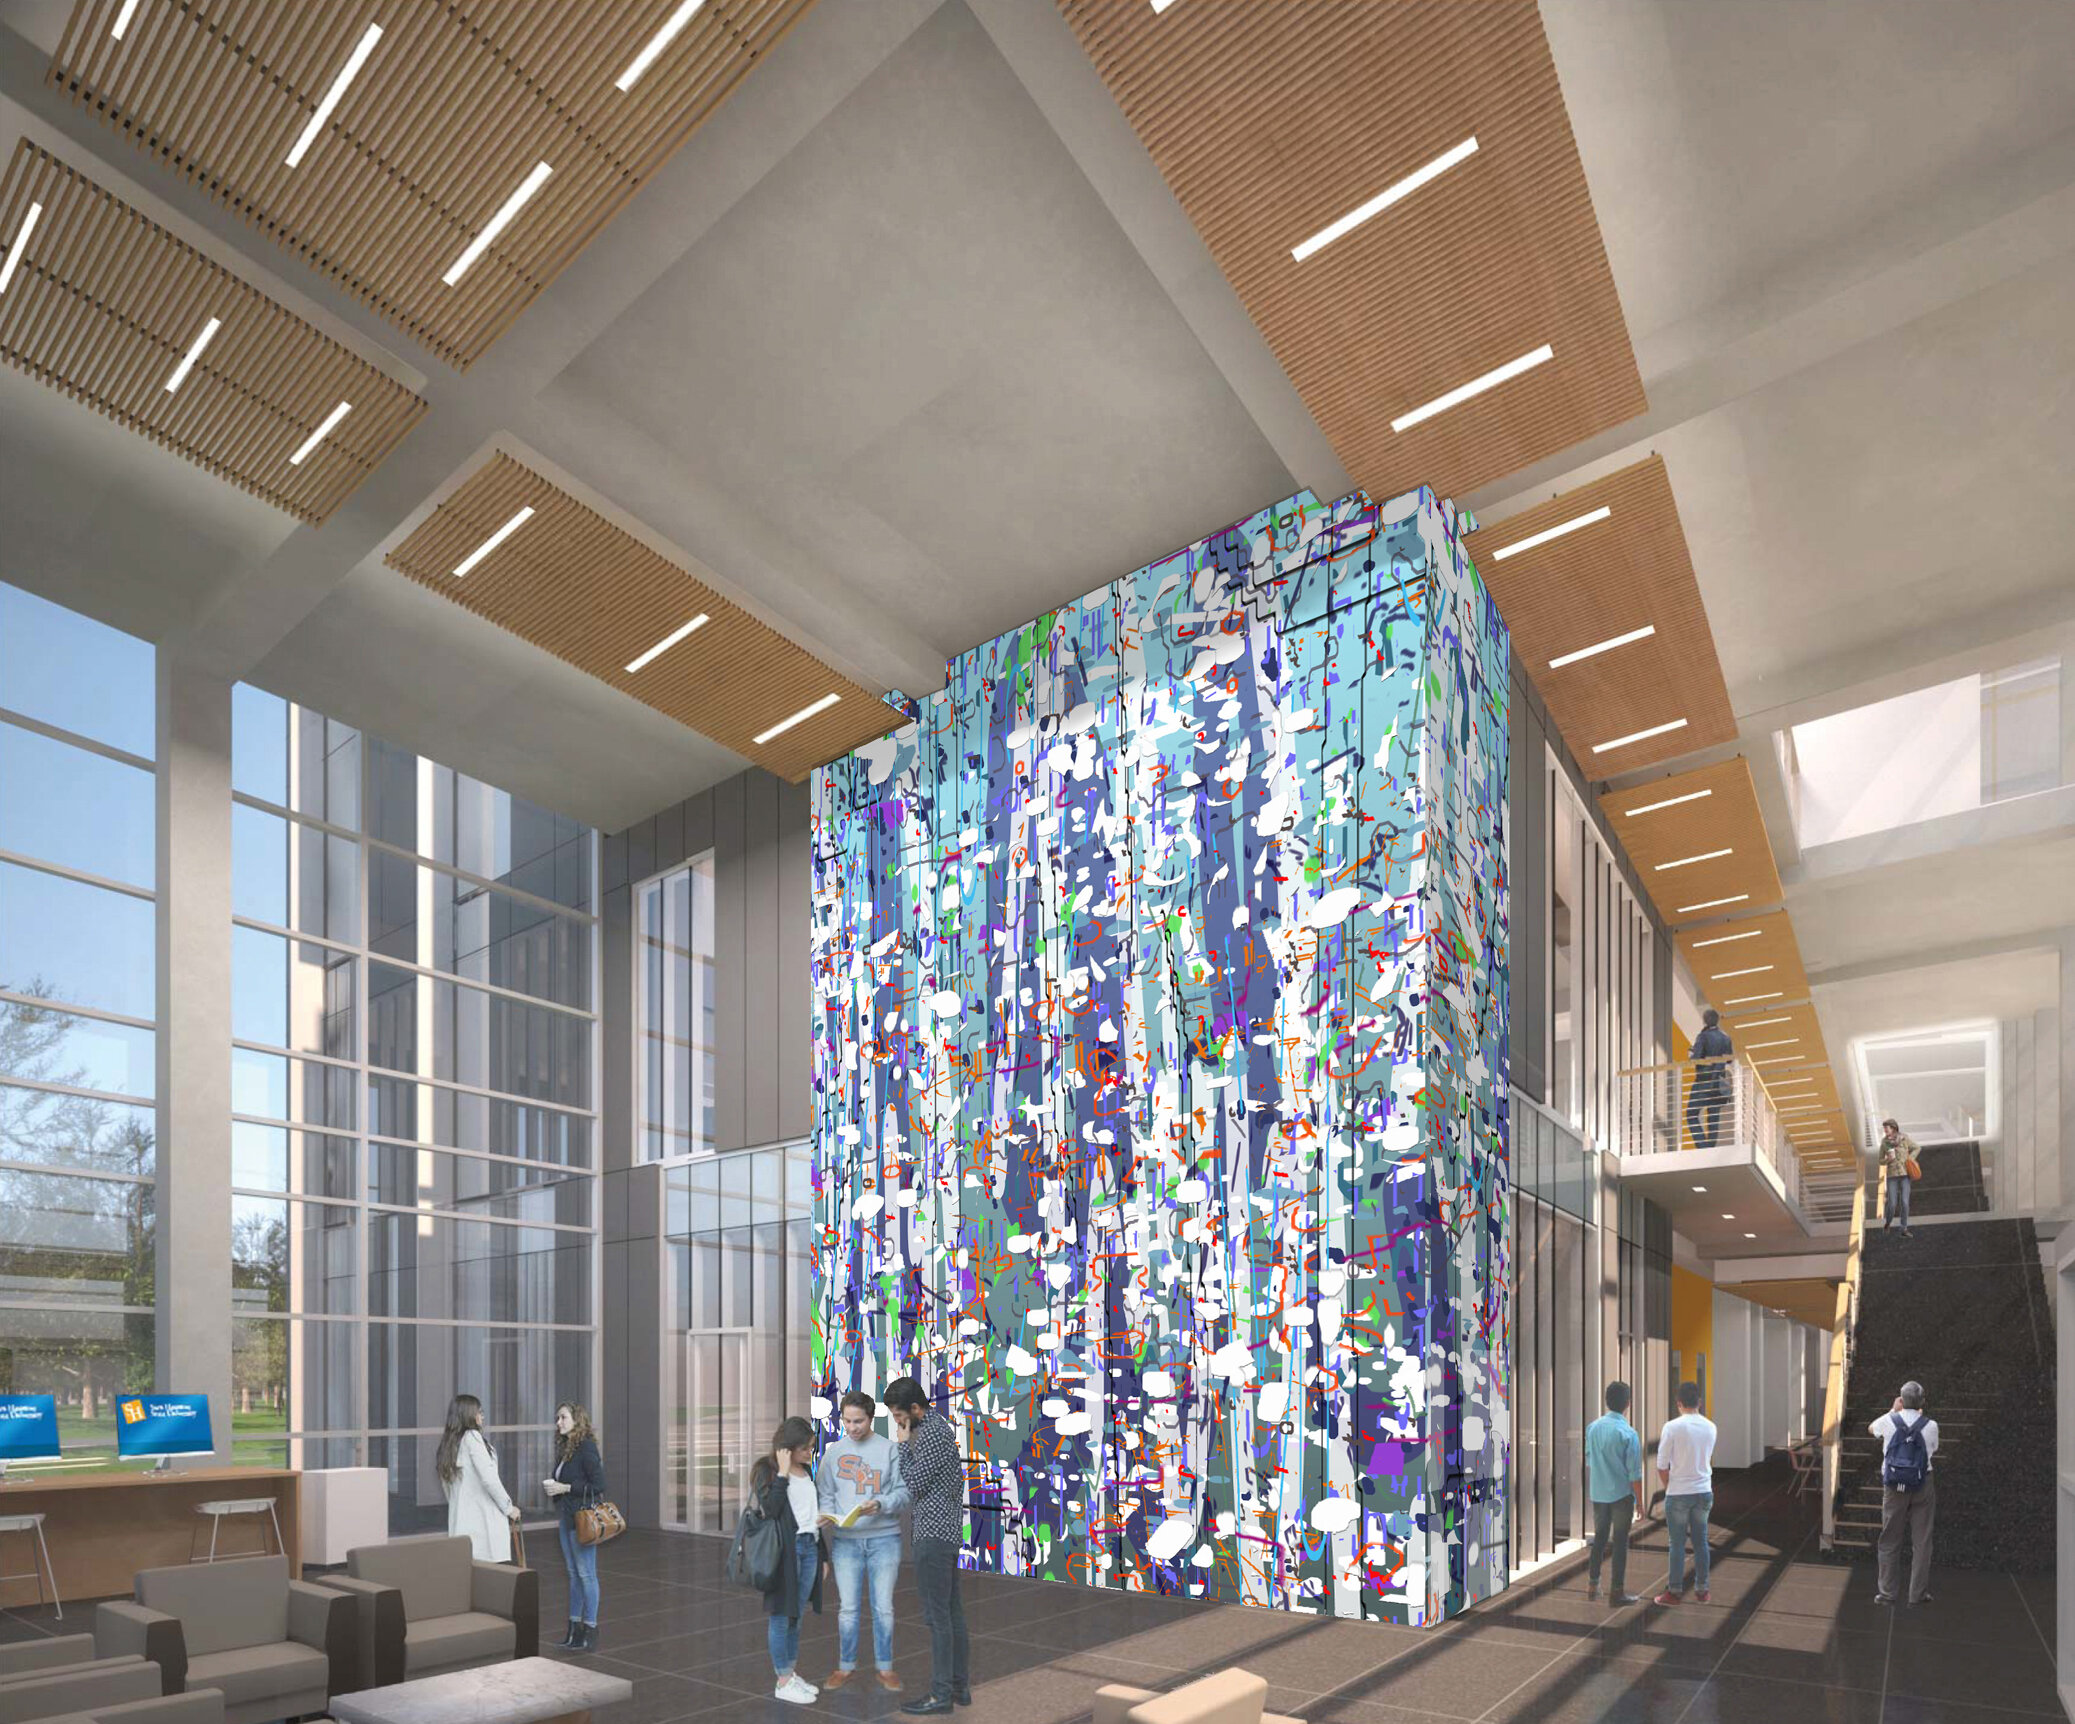  [concept mockup]  Large Variation: Blue   Ceramic mosaic  26 x 26 feet Sam Houston State University, College of Osteopathic Medicine Building, Conroe, Texas     